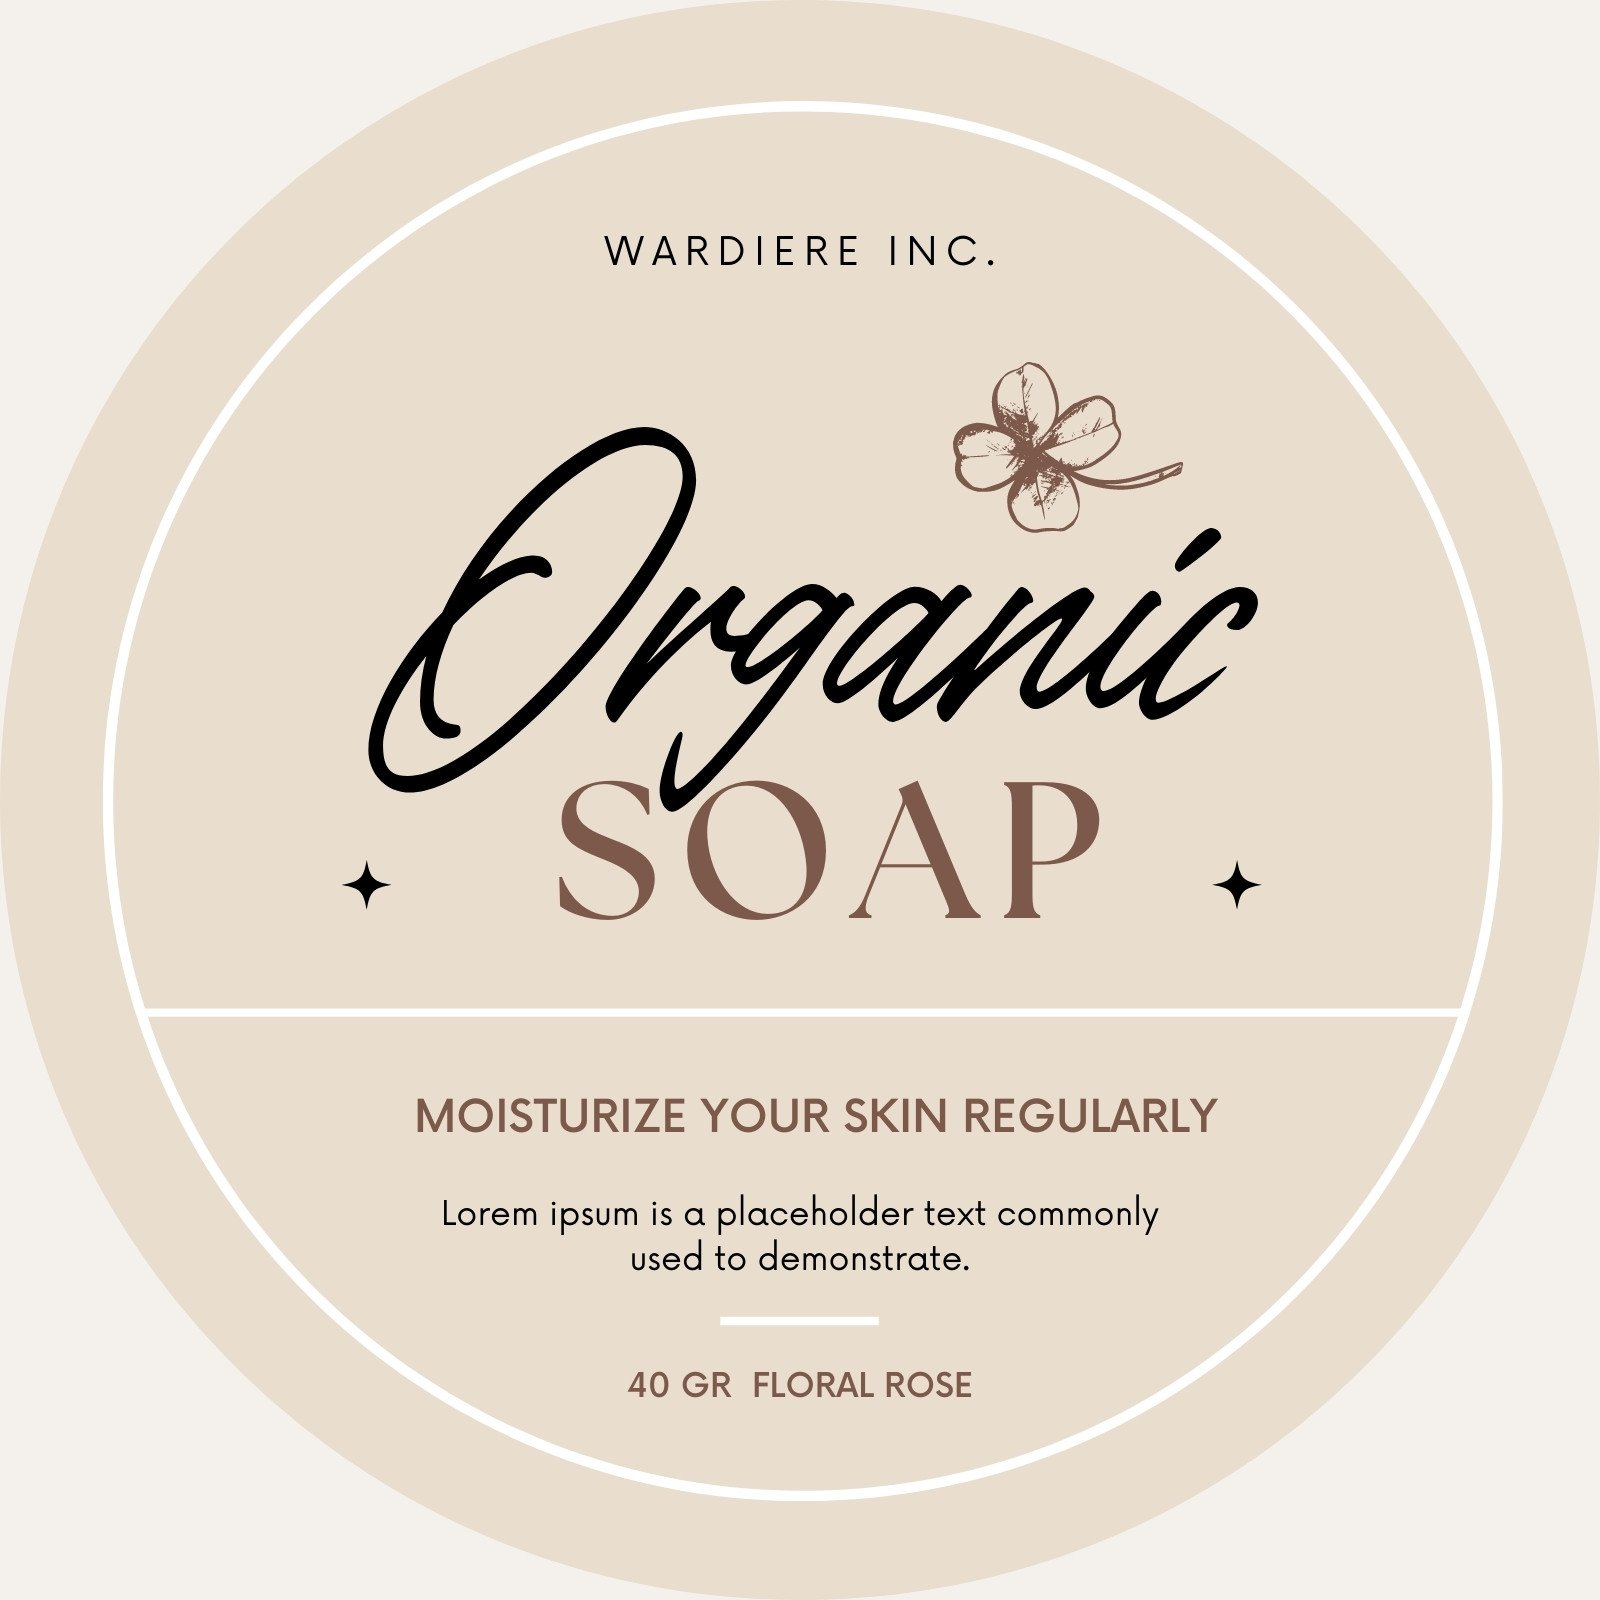 Free customizable printable soap label templates